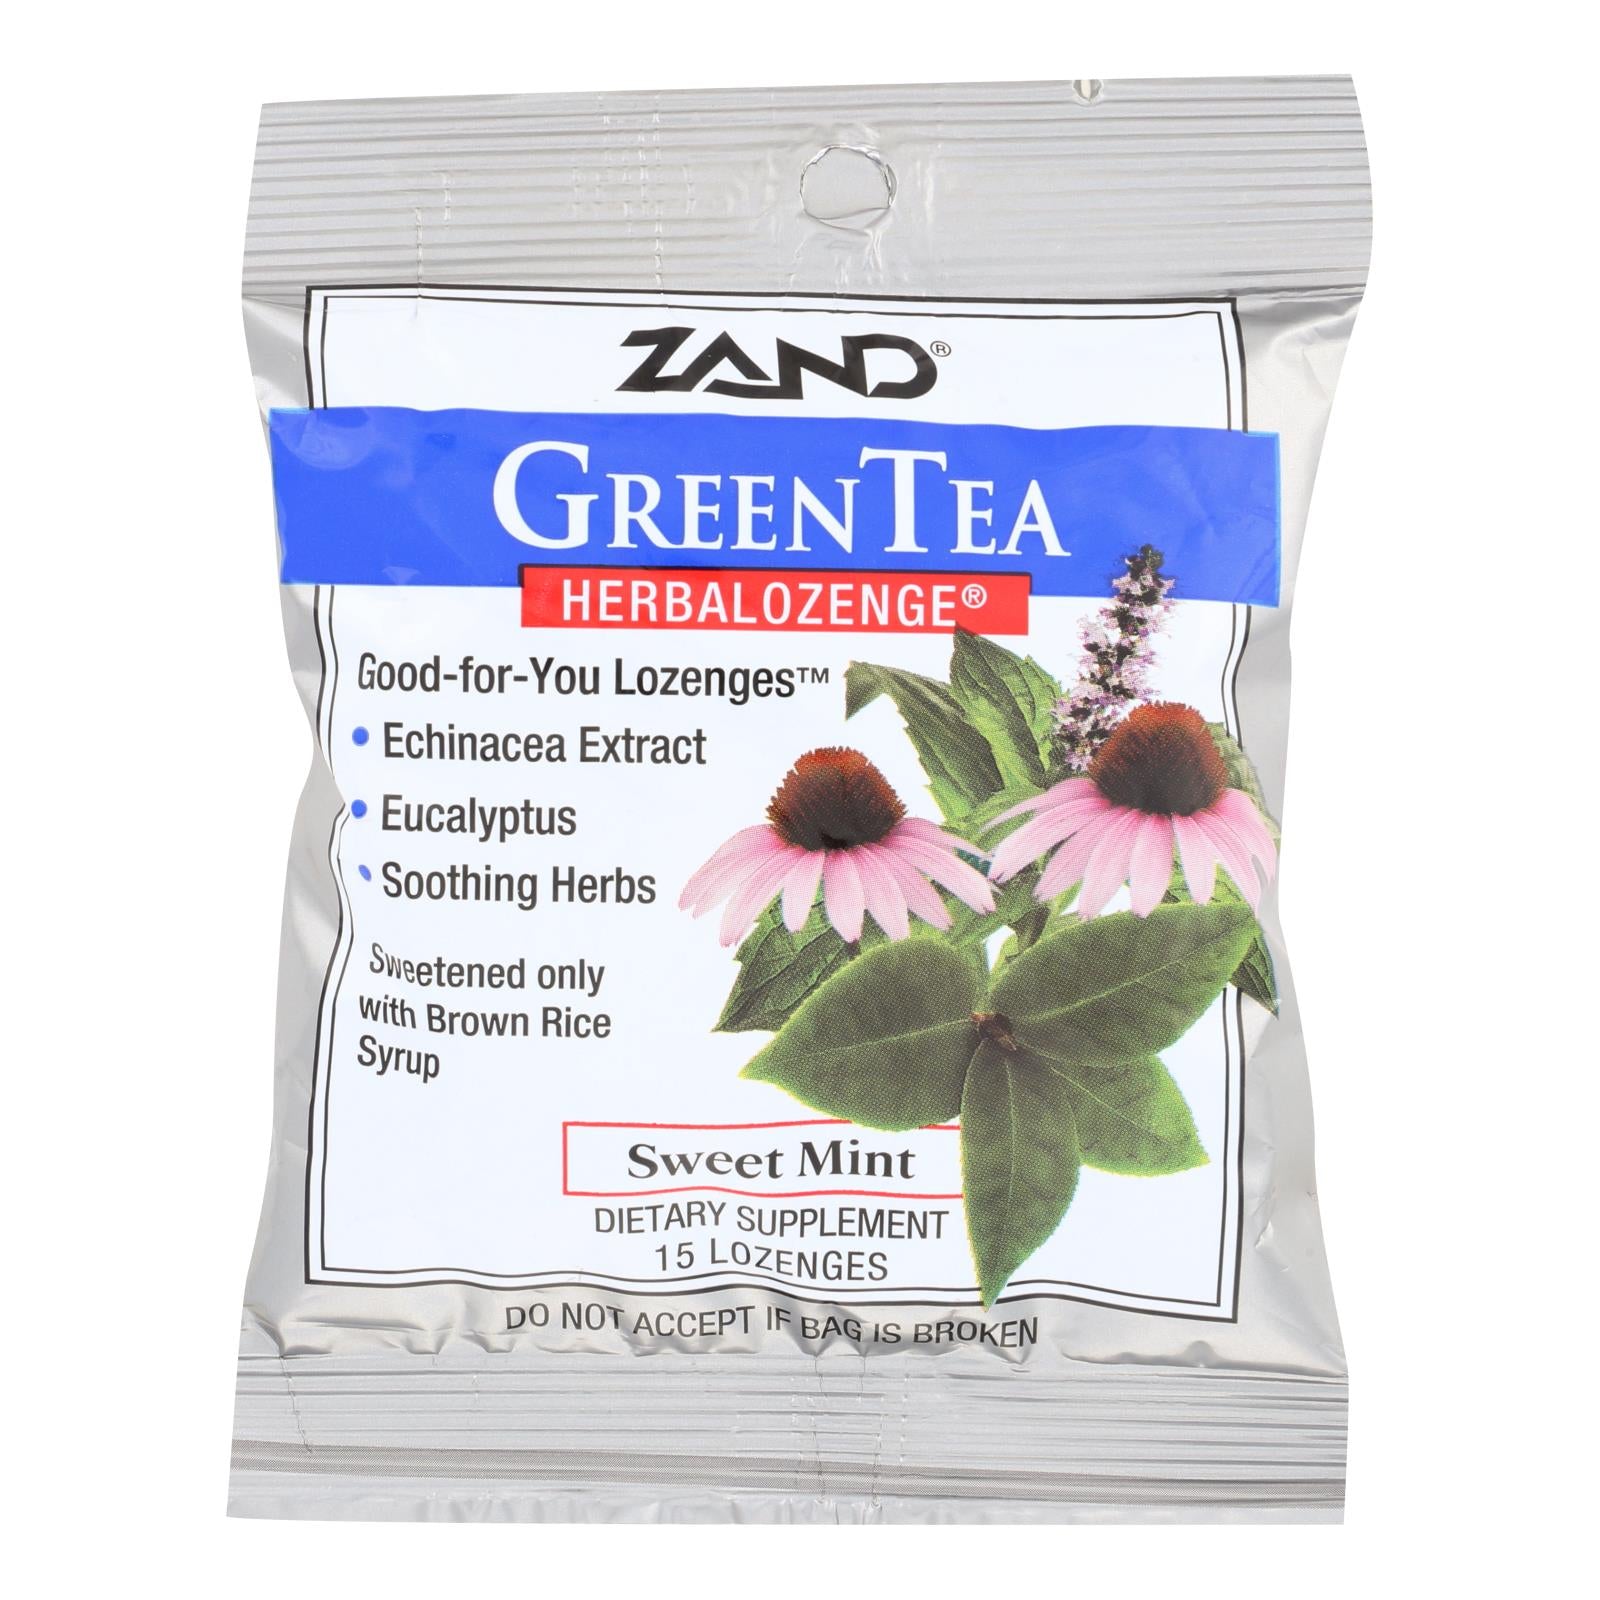 Zand Counter Display - Herbal Supplement - Herbalozenge - Green Tea With Echinacea - 15 Lozenges - Case Of 12